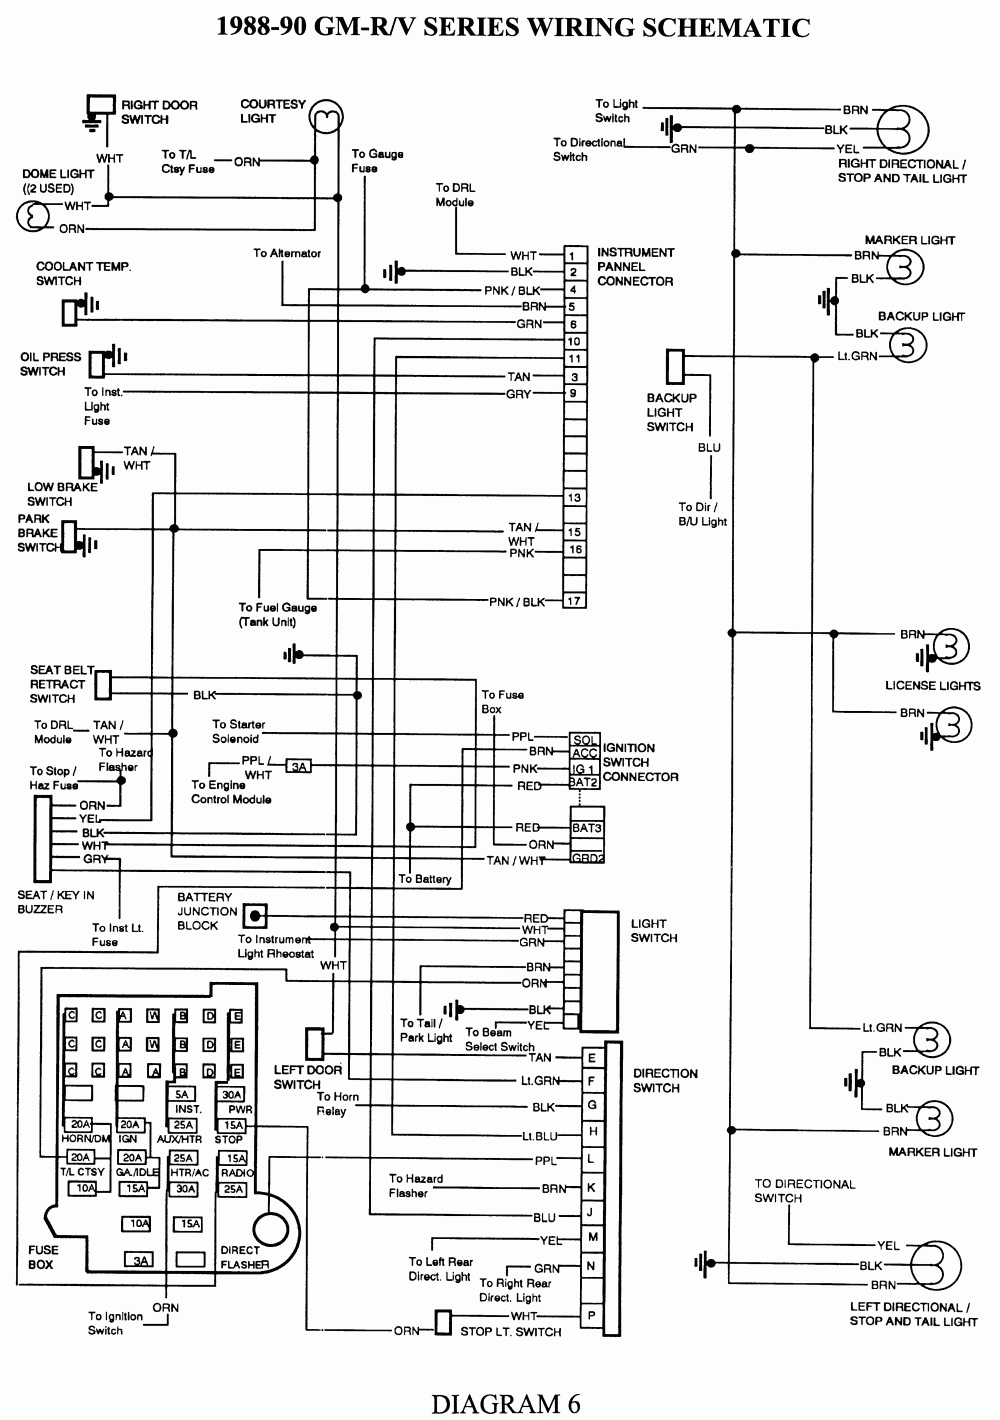 A Picture Of A 1997 350 Vortec Wiring Diagram | Wiring Library - 5.7 Vortec Engine Wiring Diagram